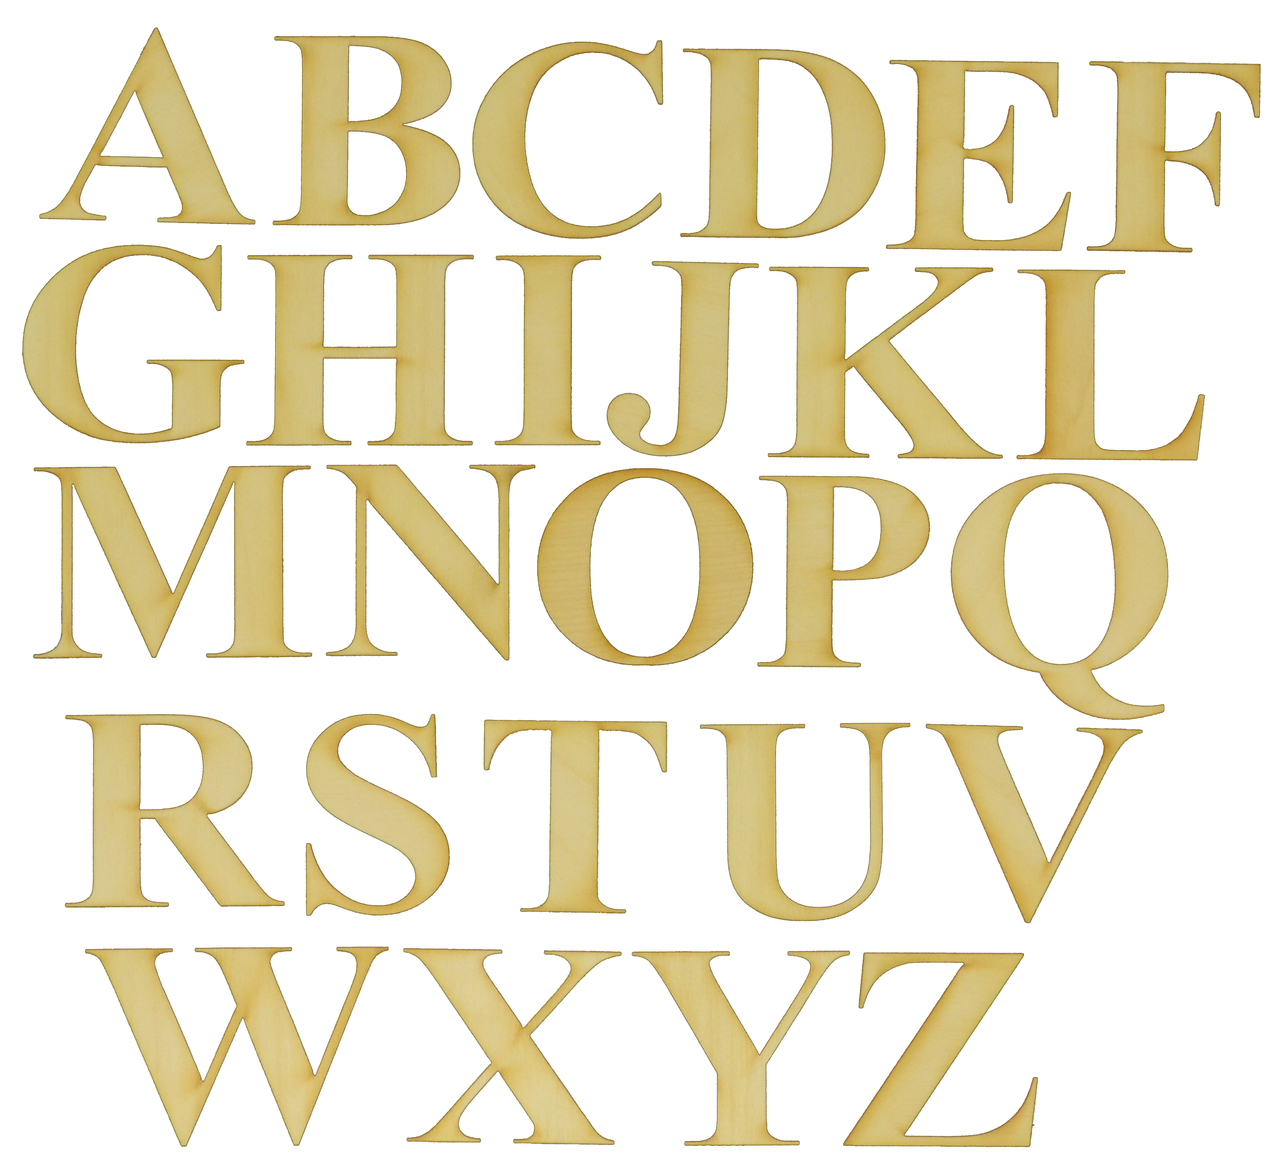 roman alphabet